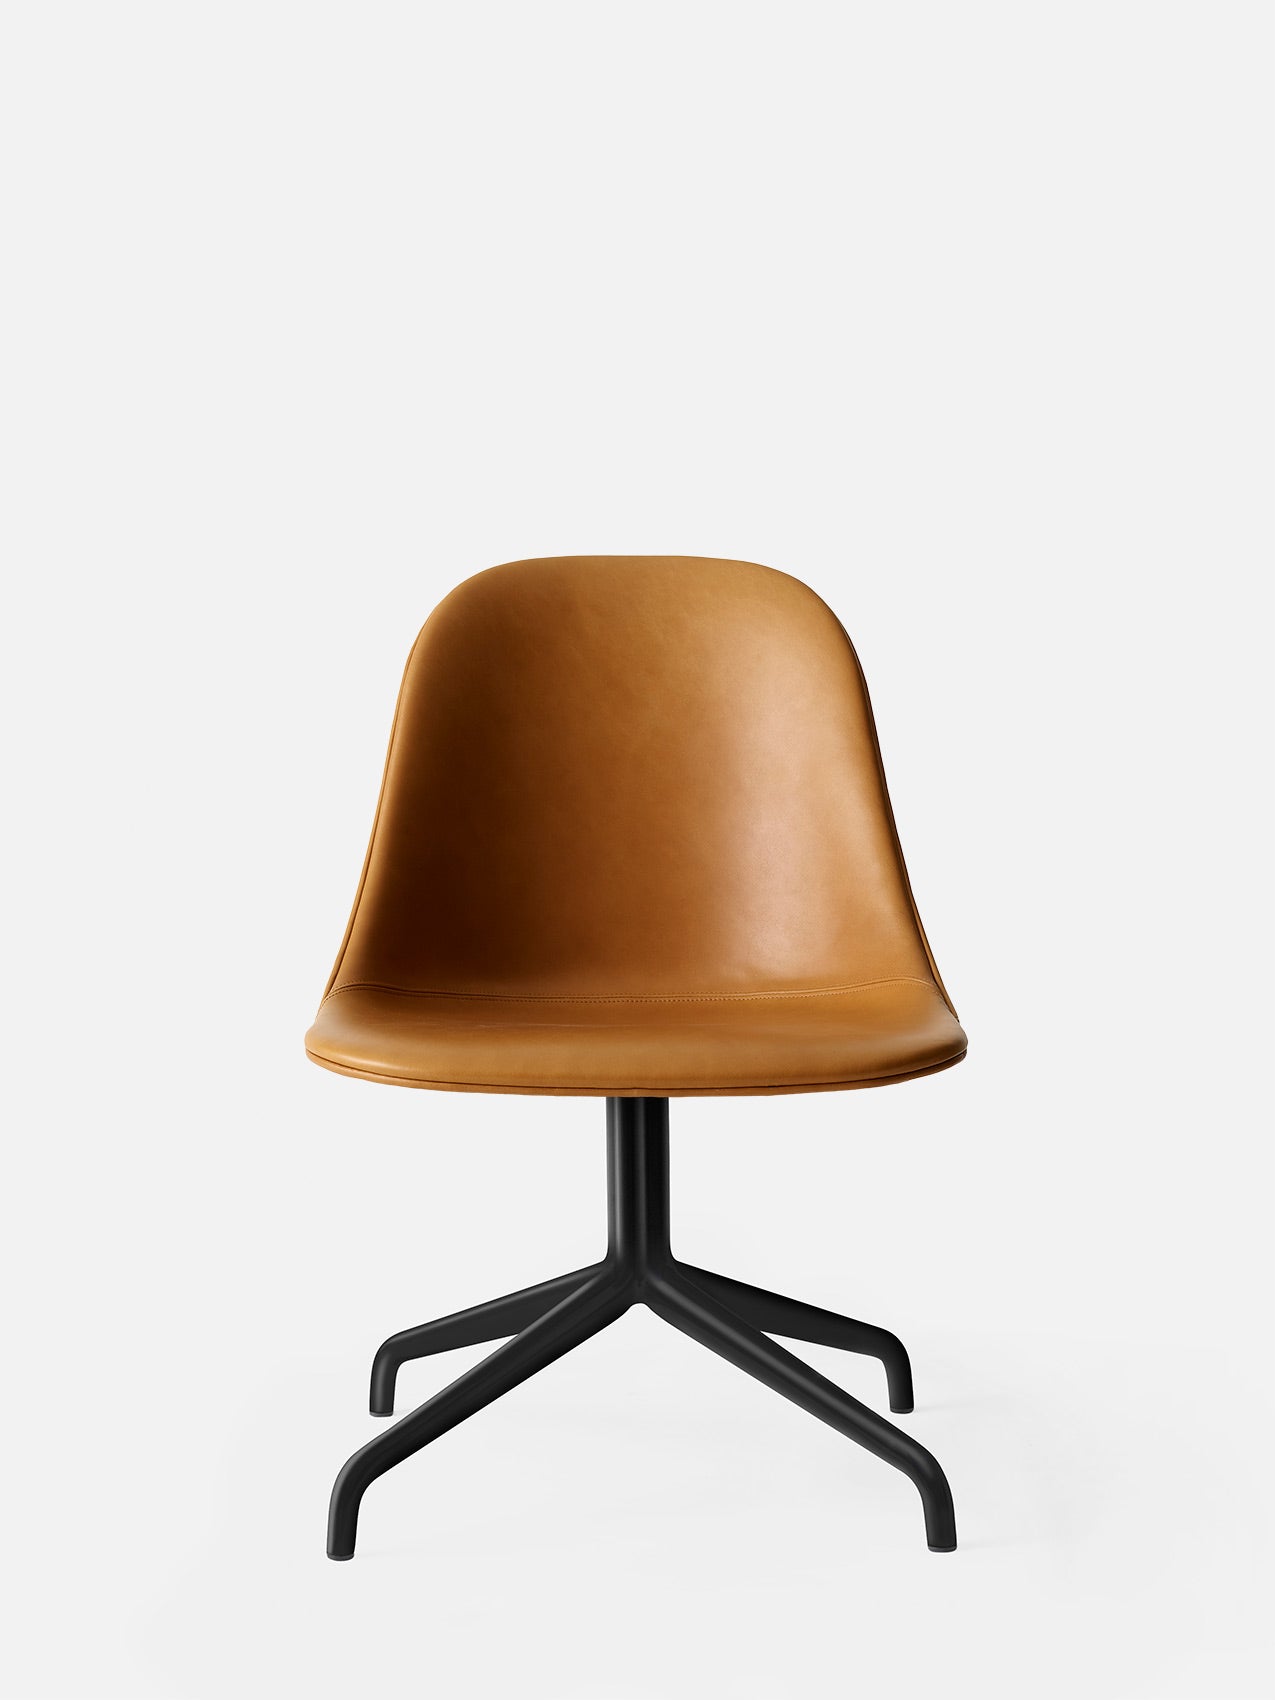 Harbour Side Chair, Upholstered-Chair-Norm Architects-Star Base (Seat 17.7in H)/Black Steel-0250 Cognac/Dakar-menu-minimalist-modern-danish-design-home-decor